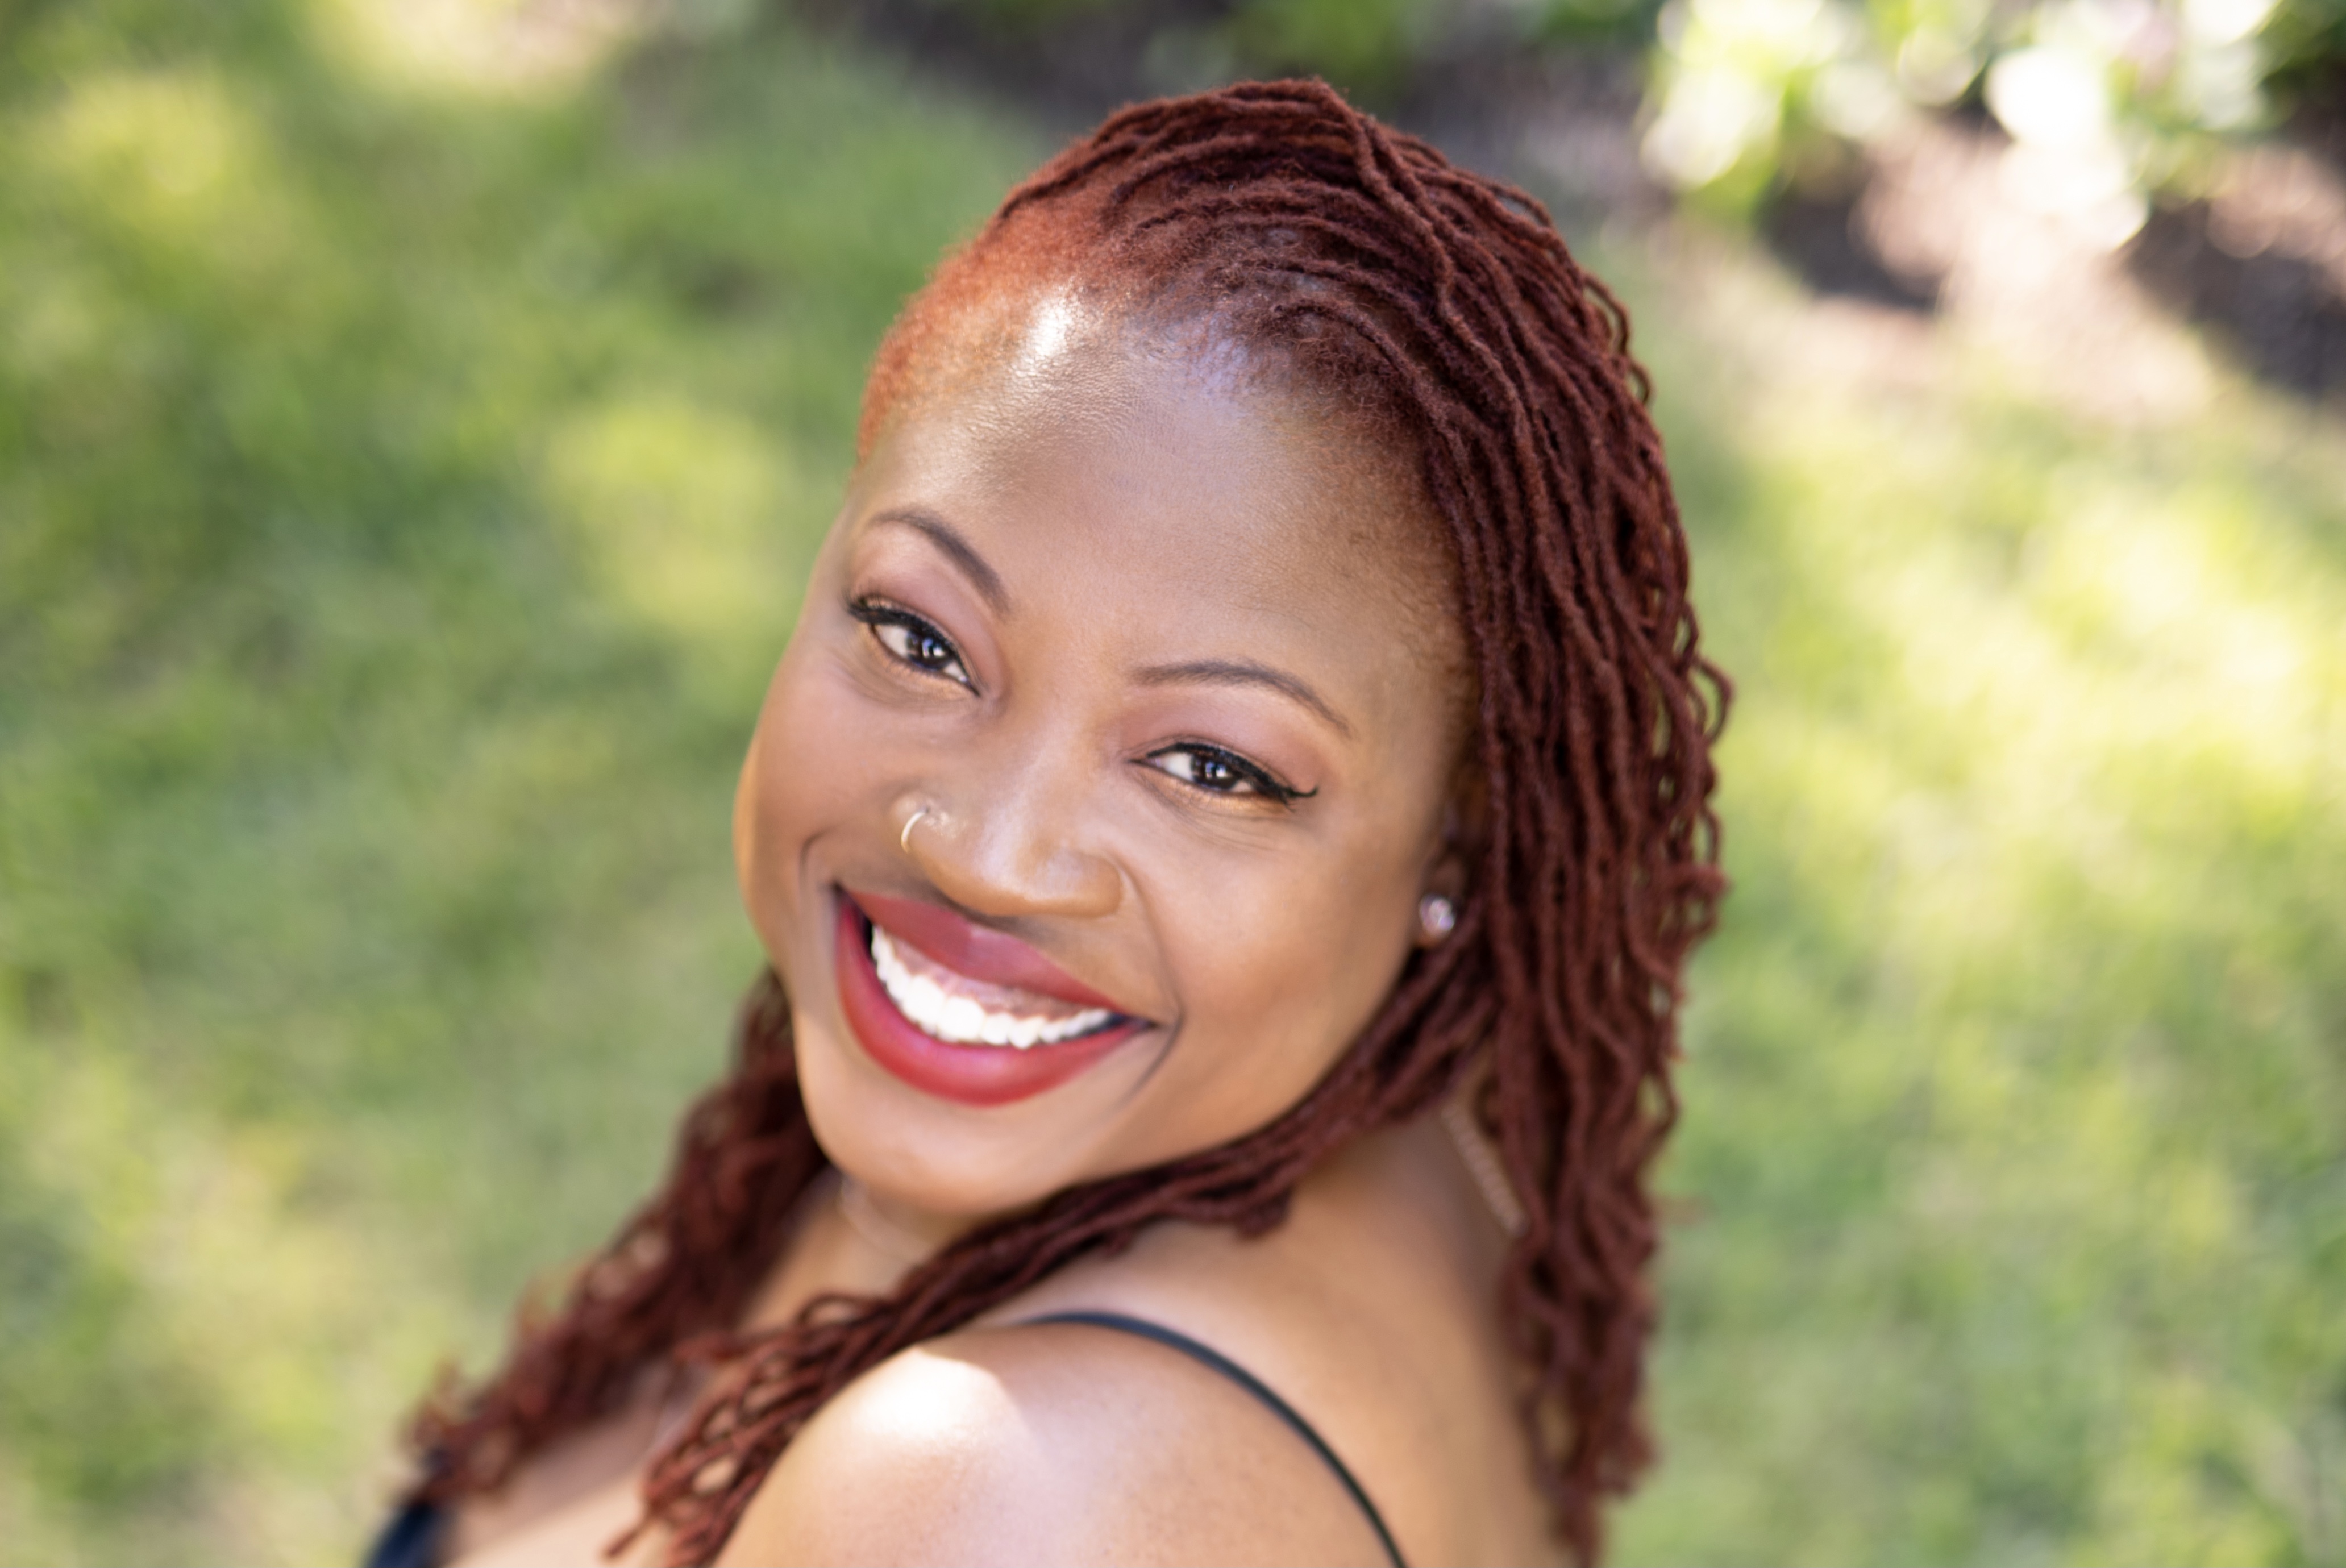 Picture of Eboni Hamilton, MS, LPC smiling
#blacktherapist #therapywitheboni #cooltherapist #therapistformusicians #therapistforartists
#therapistsforblackpeople
#therapistforcreators
#blackmentalhealthcounselor
#therapeuticcoaching